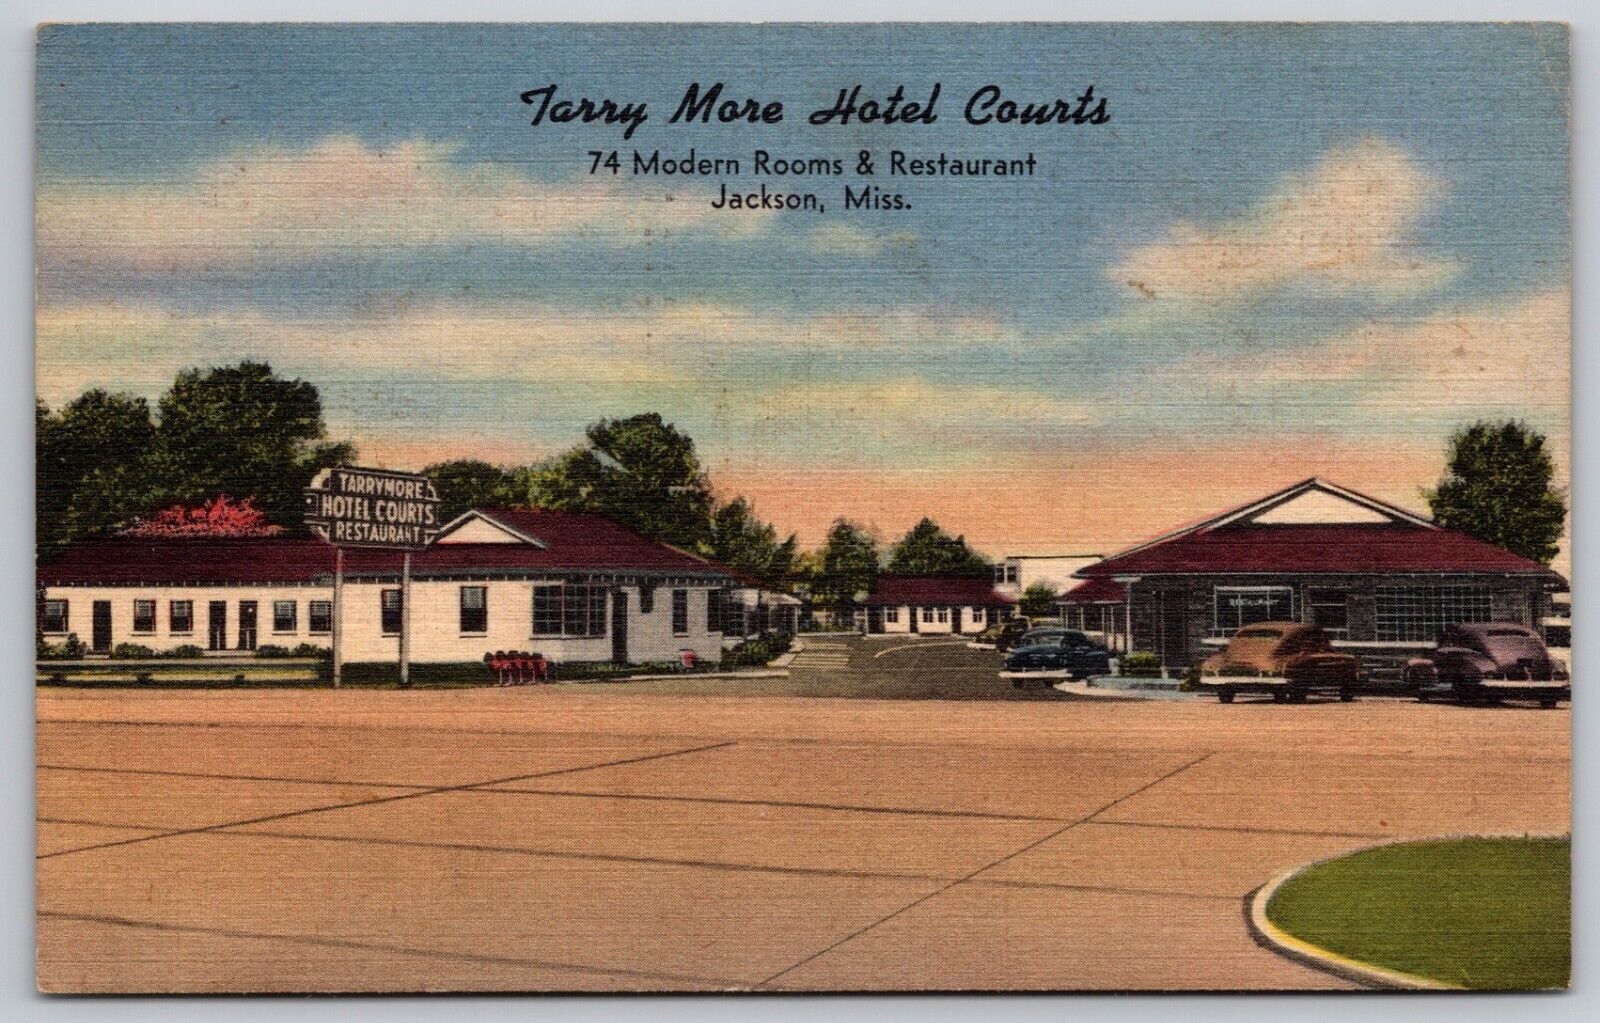 Terry More Hotel Courts Jackson Mississippi Motel & Restaurant - Postcard